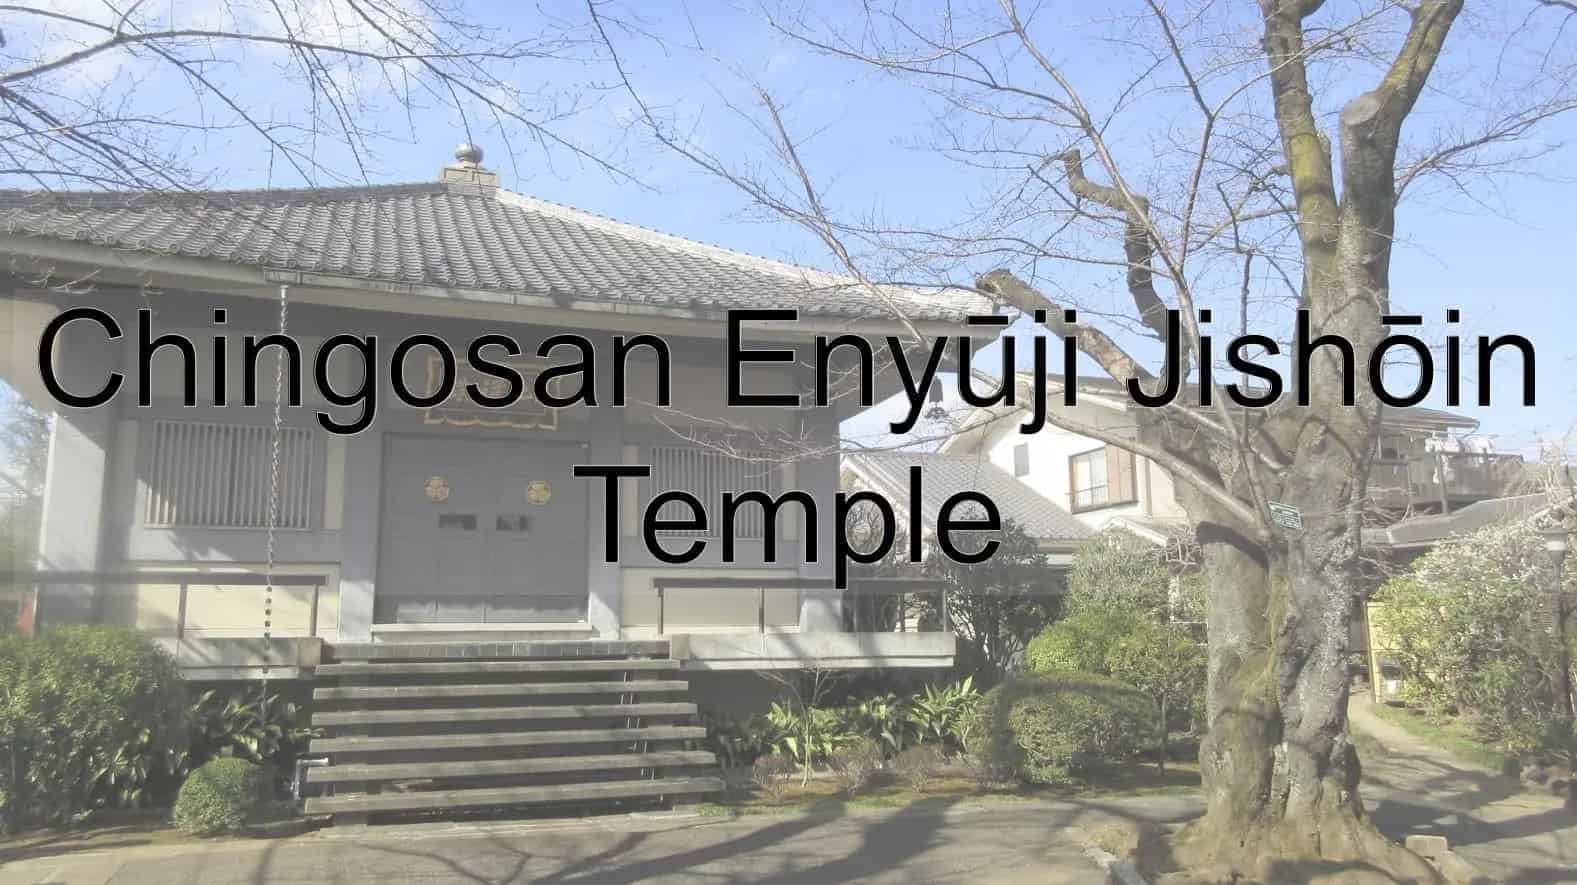 Jishoin_Temple/Jishoin_Temple_English.jpg